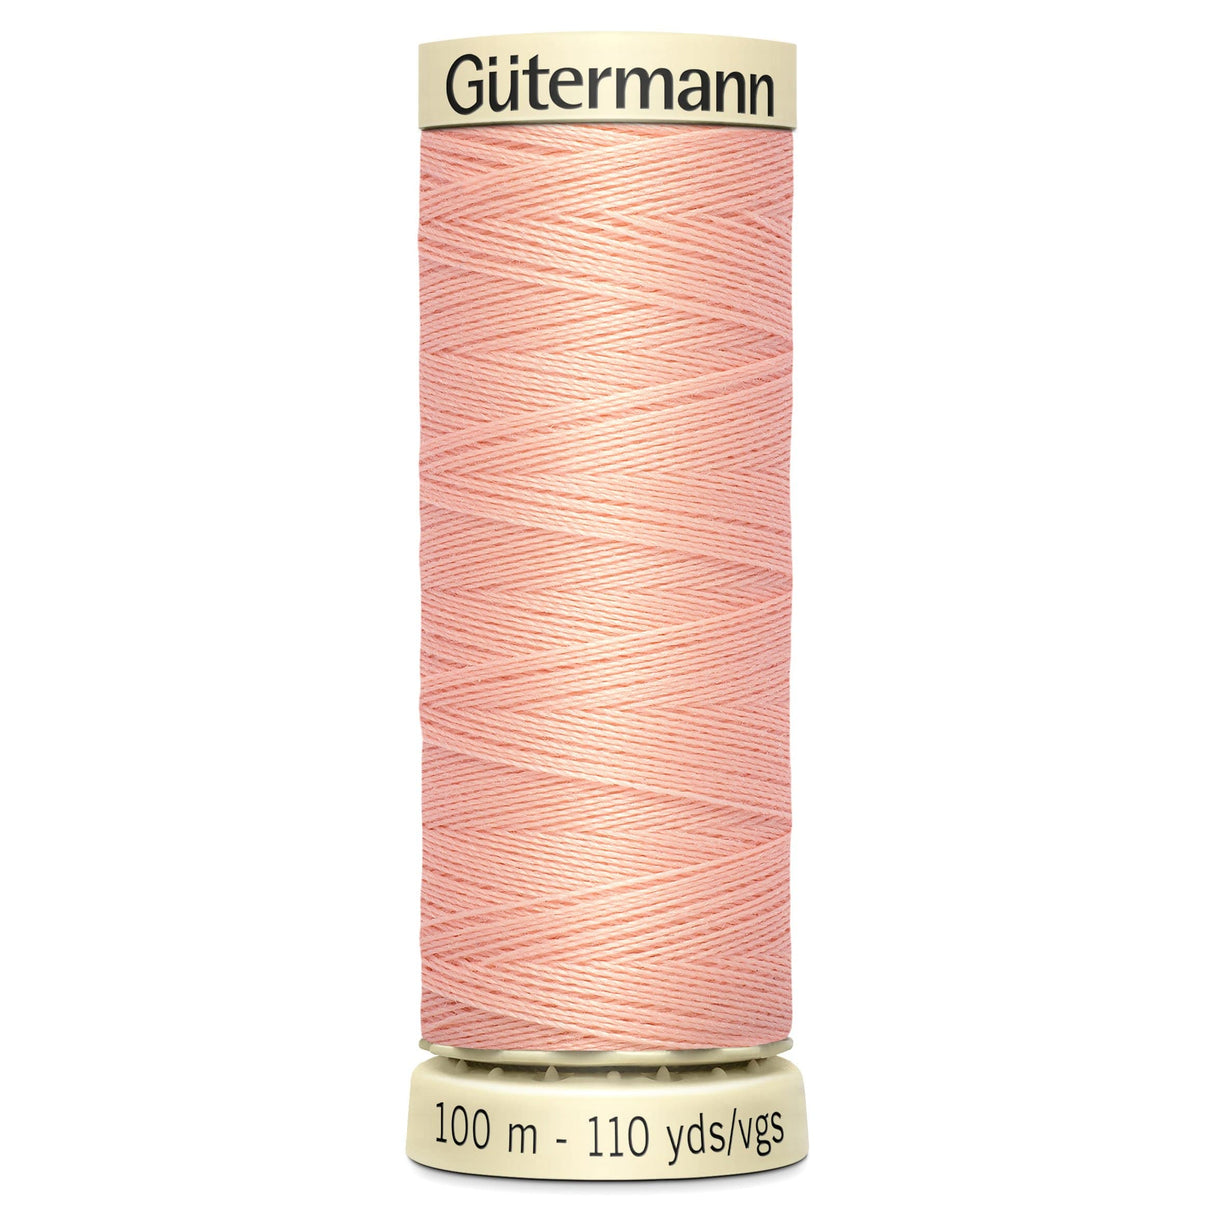 Groves Haberdashery 165 Gutermann Thread Sewing Cotton 100 m Black to Pink